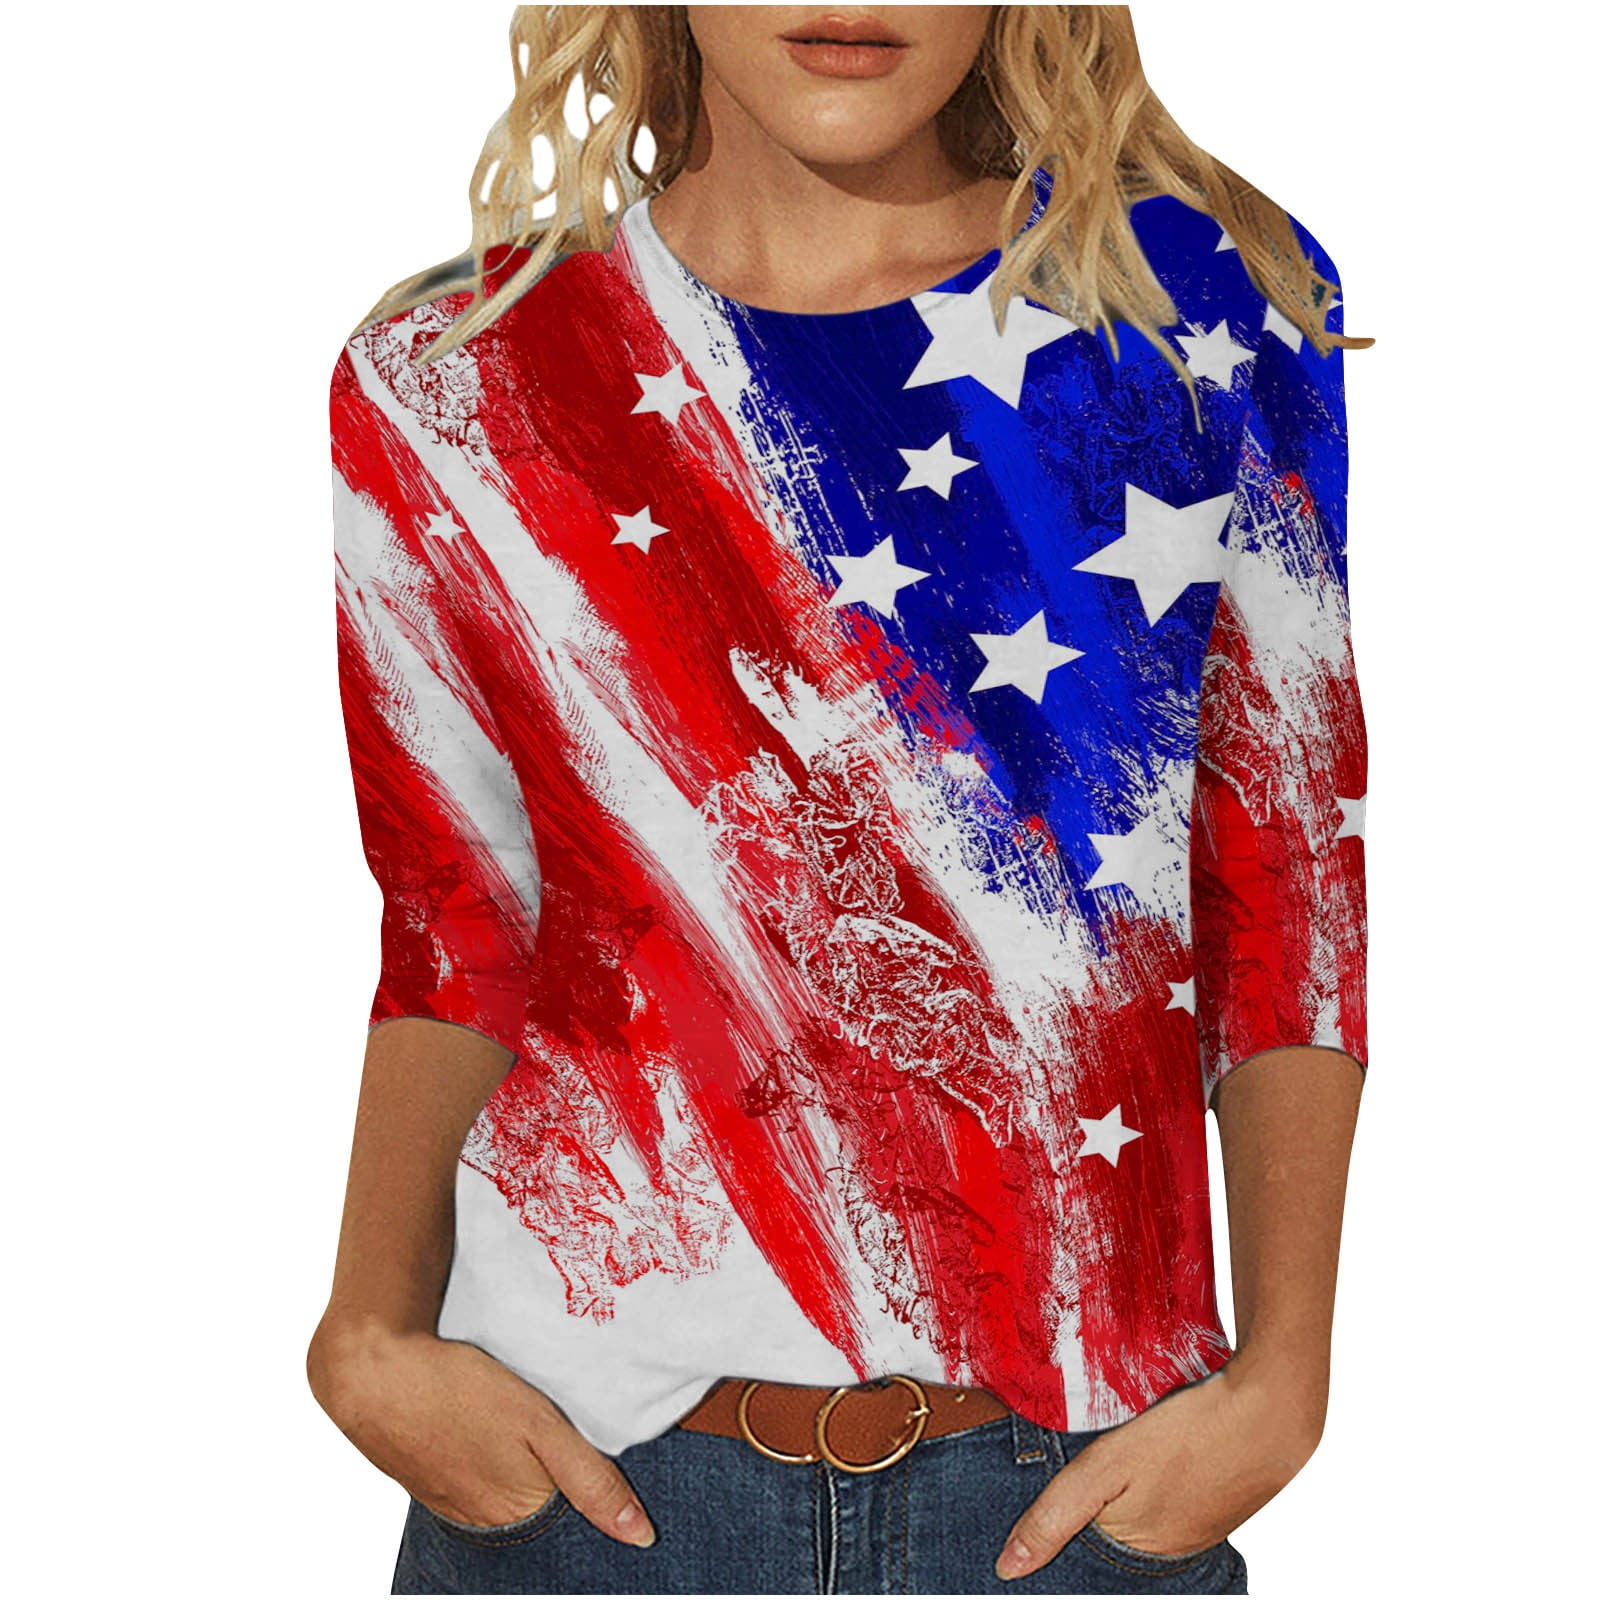 Womens Summer Tunic Top Short Sleeve See Through Patriotic Star USA Print T-Shirt Casual Blouse 